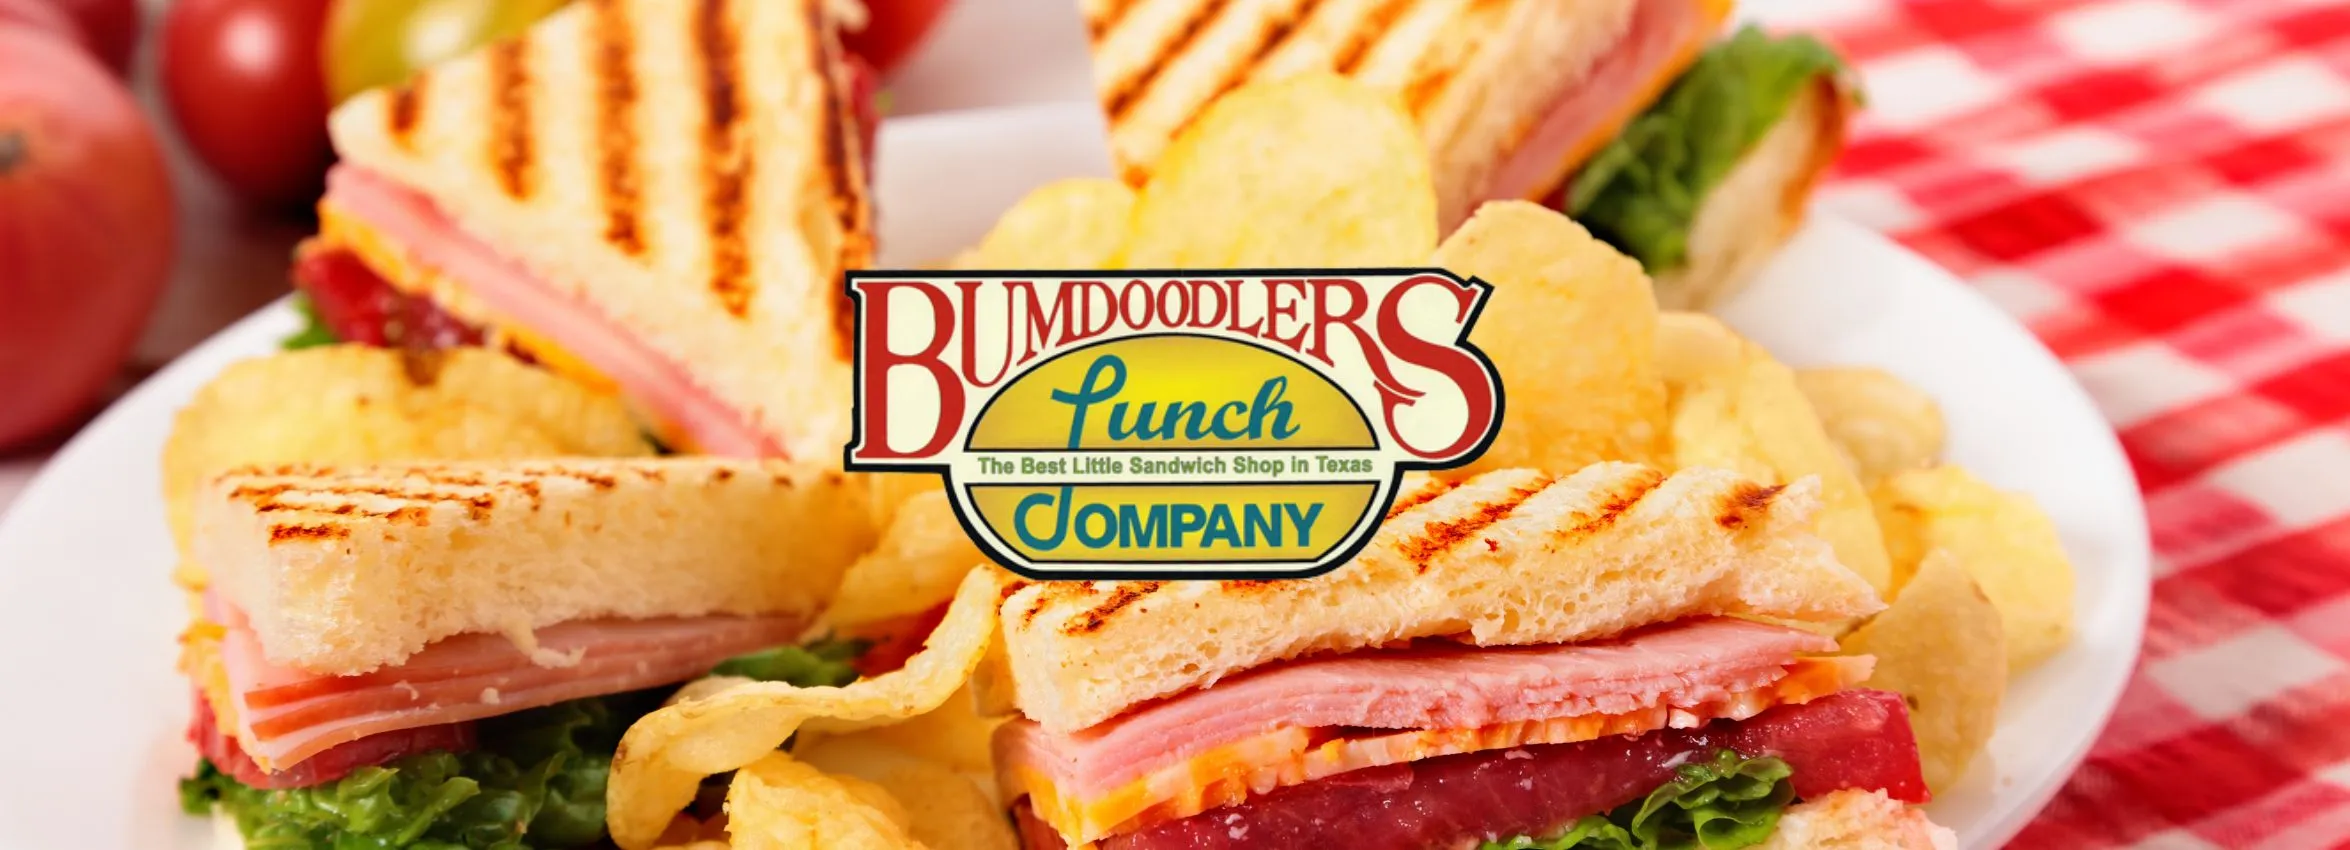 Bumdoodlers-Lunch-Company_Desktop_ET